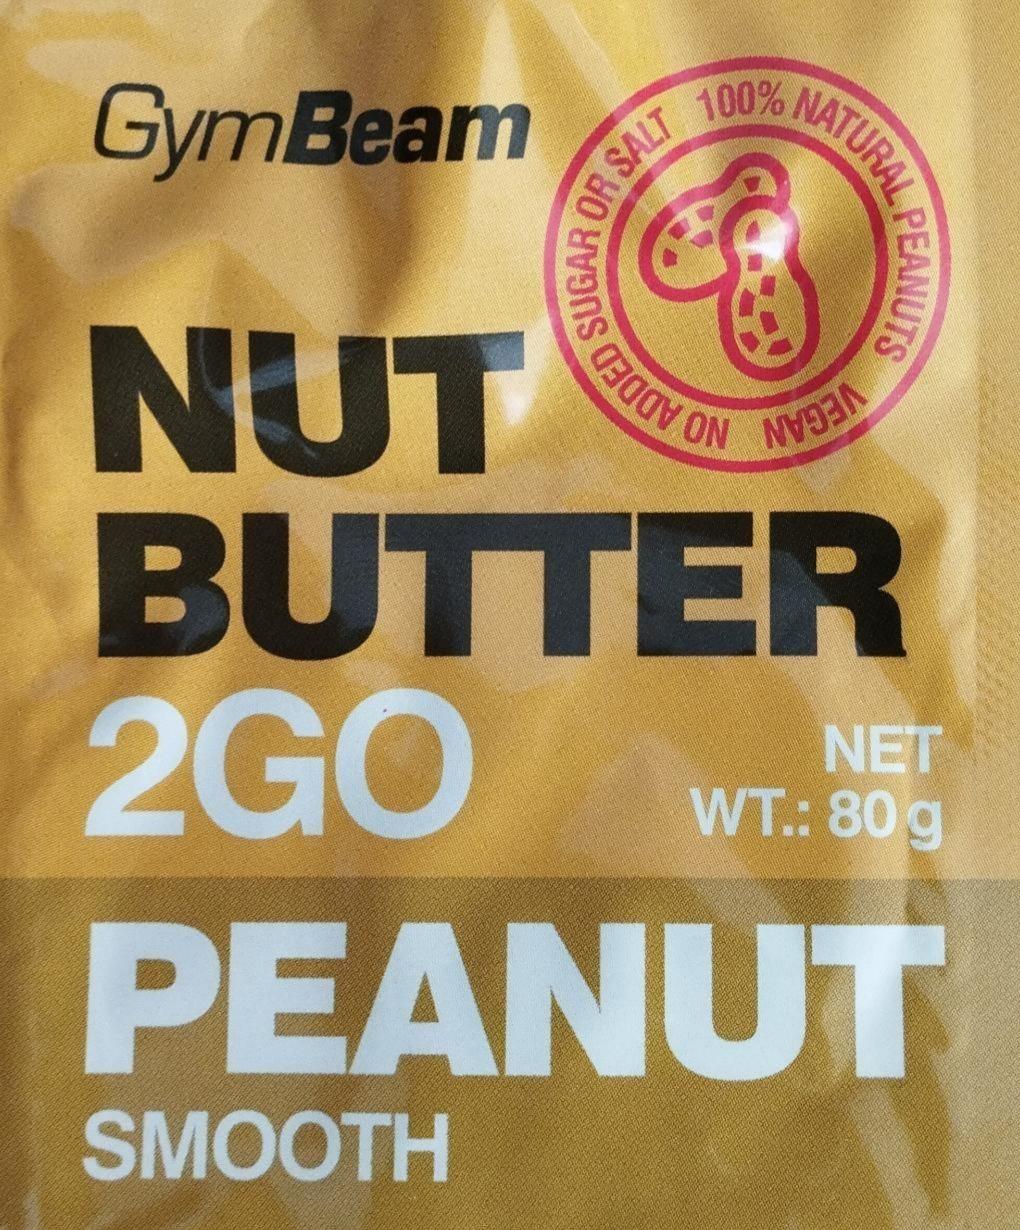 Фото - Nut Butter 2GO peanut butter GymBeam